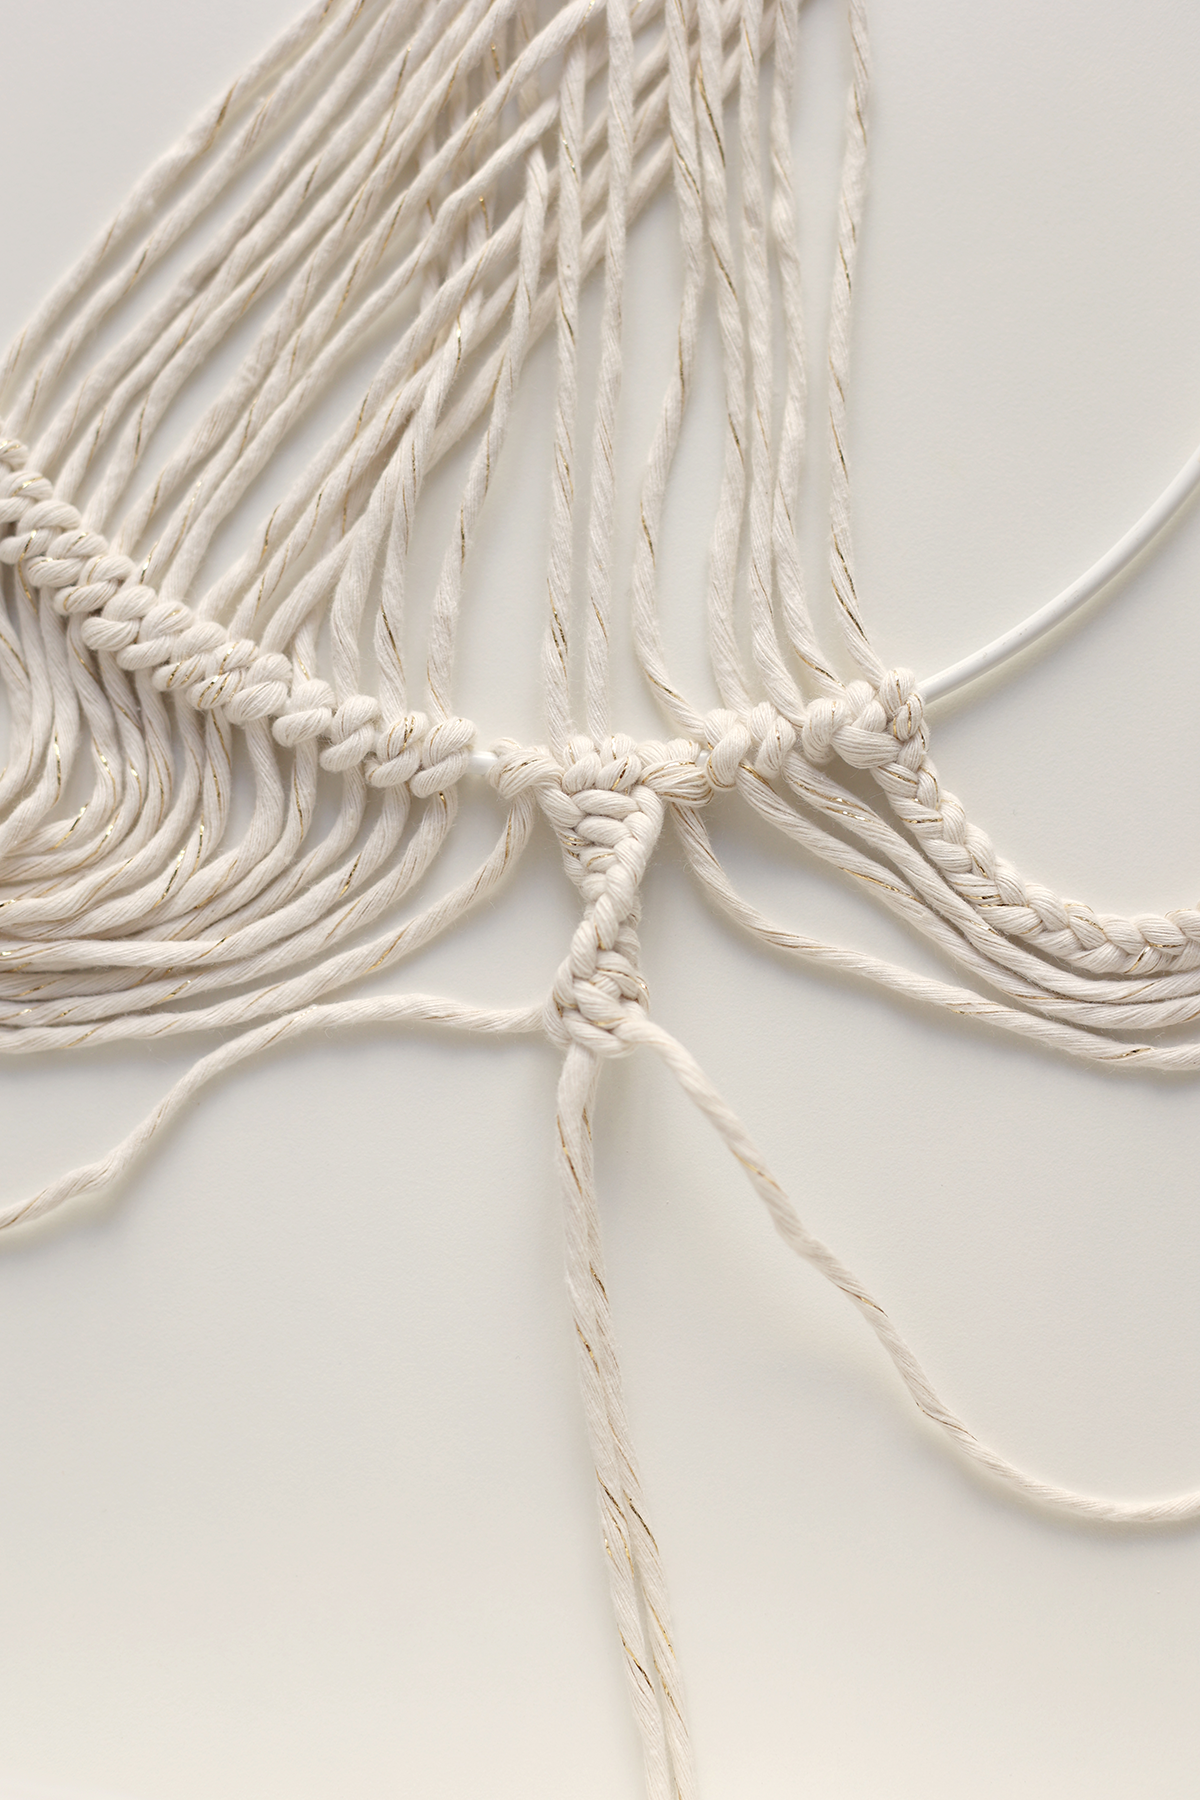 DIY: Makramee-Traumfänger - Anleitung für einen rechtsgedrehten Spiralknoten nach rechts gedreht | we love handmade